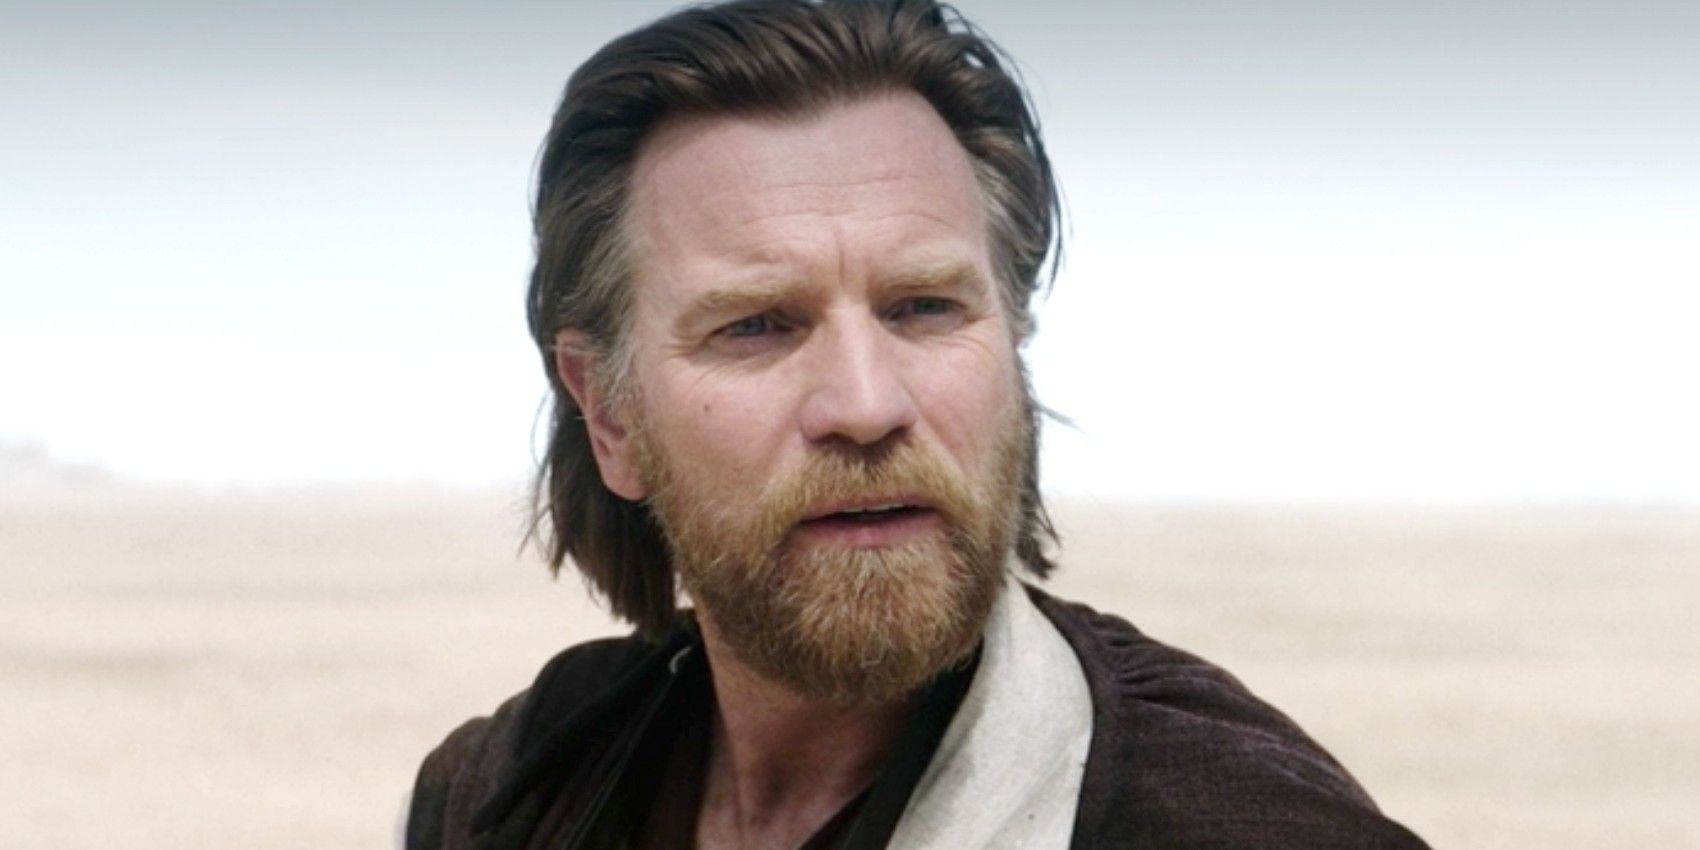 Obi-Wan Kenobi in the desert looks confused.